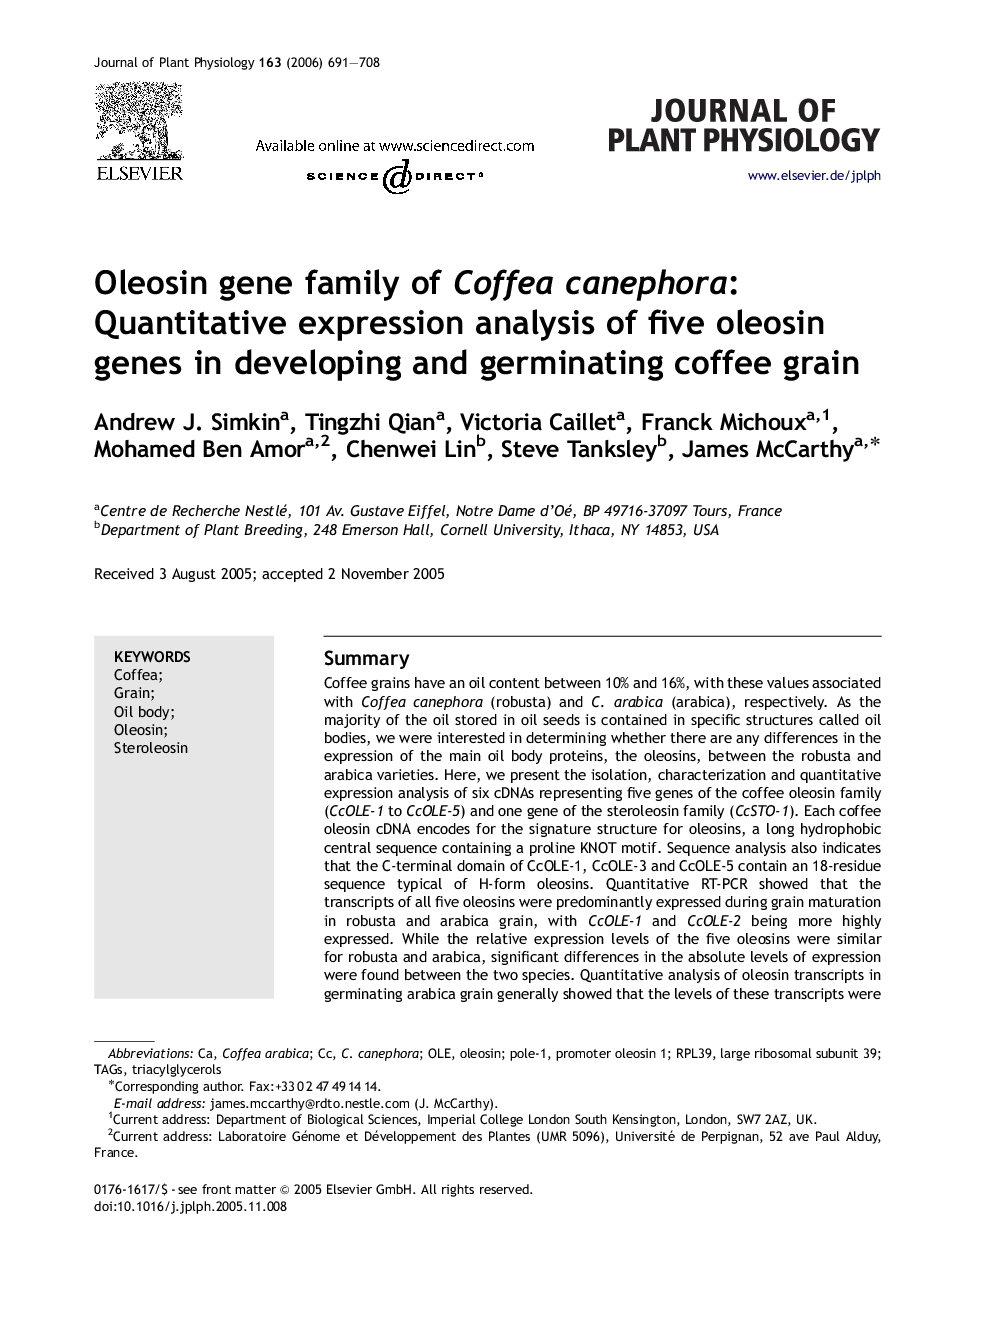 Oleosin gene family of Coffea canephora: Quantitative expression analysis of five oleosin genes in developing and germinating coffee grain